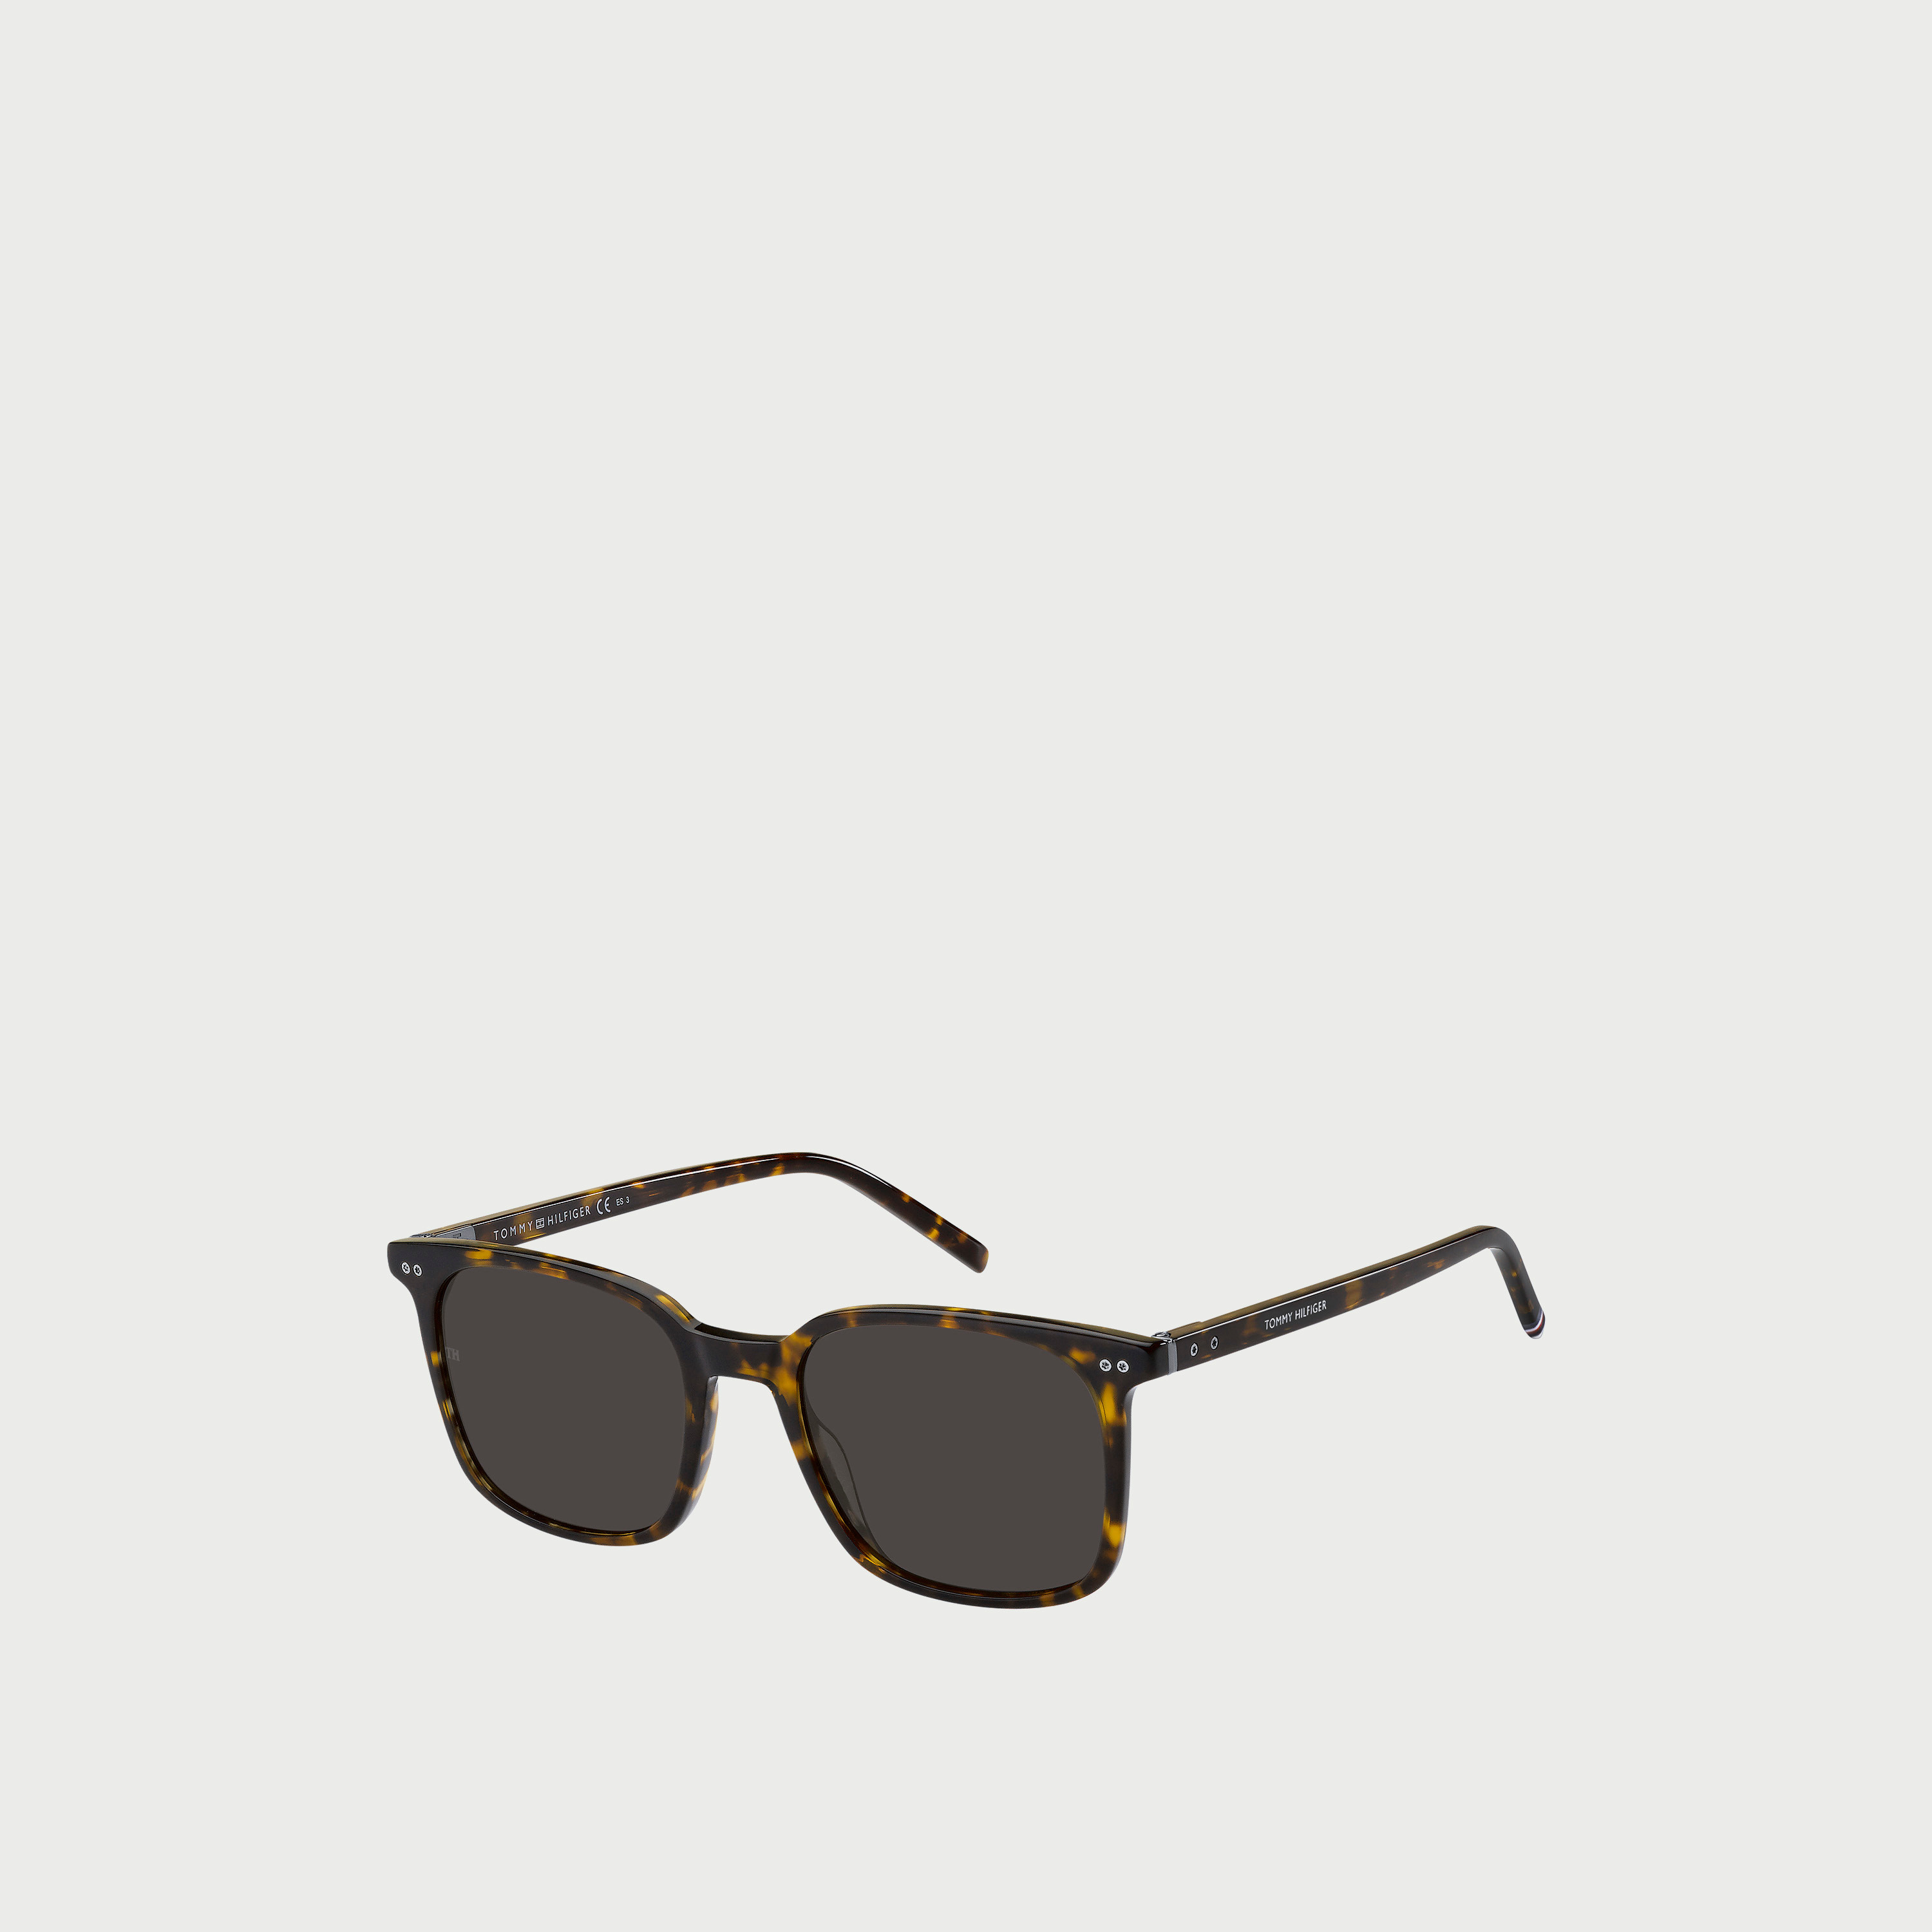 Tommy Hilfiger Th Zendaya II J5g Gold Metal Sunglasses Brown Gradient Lens  for sale online | eBay